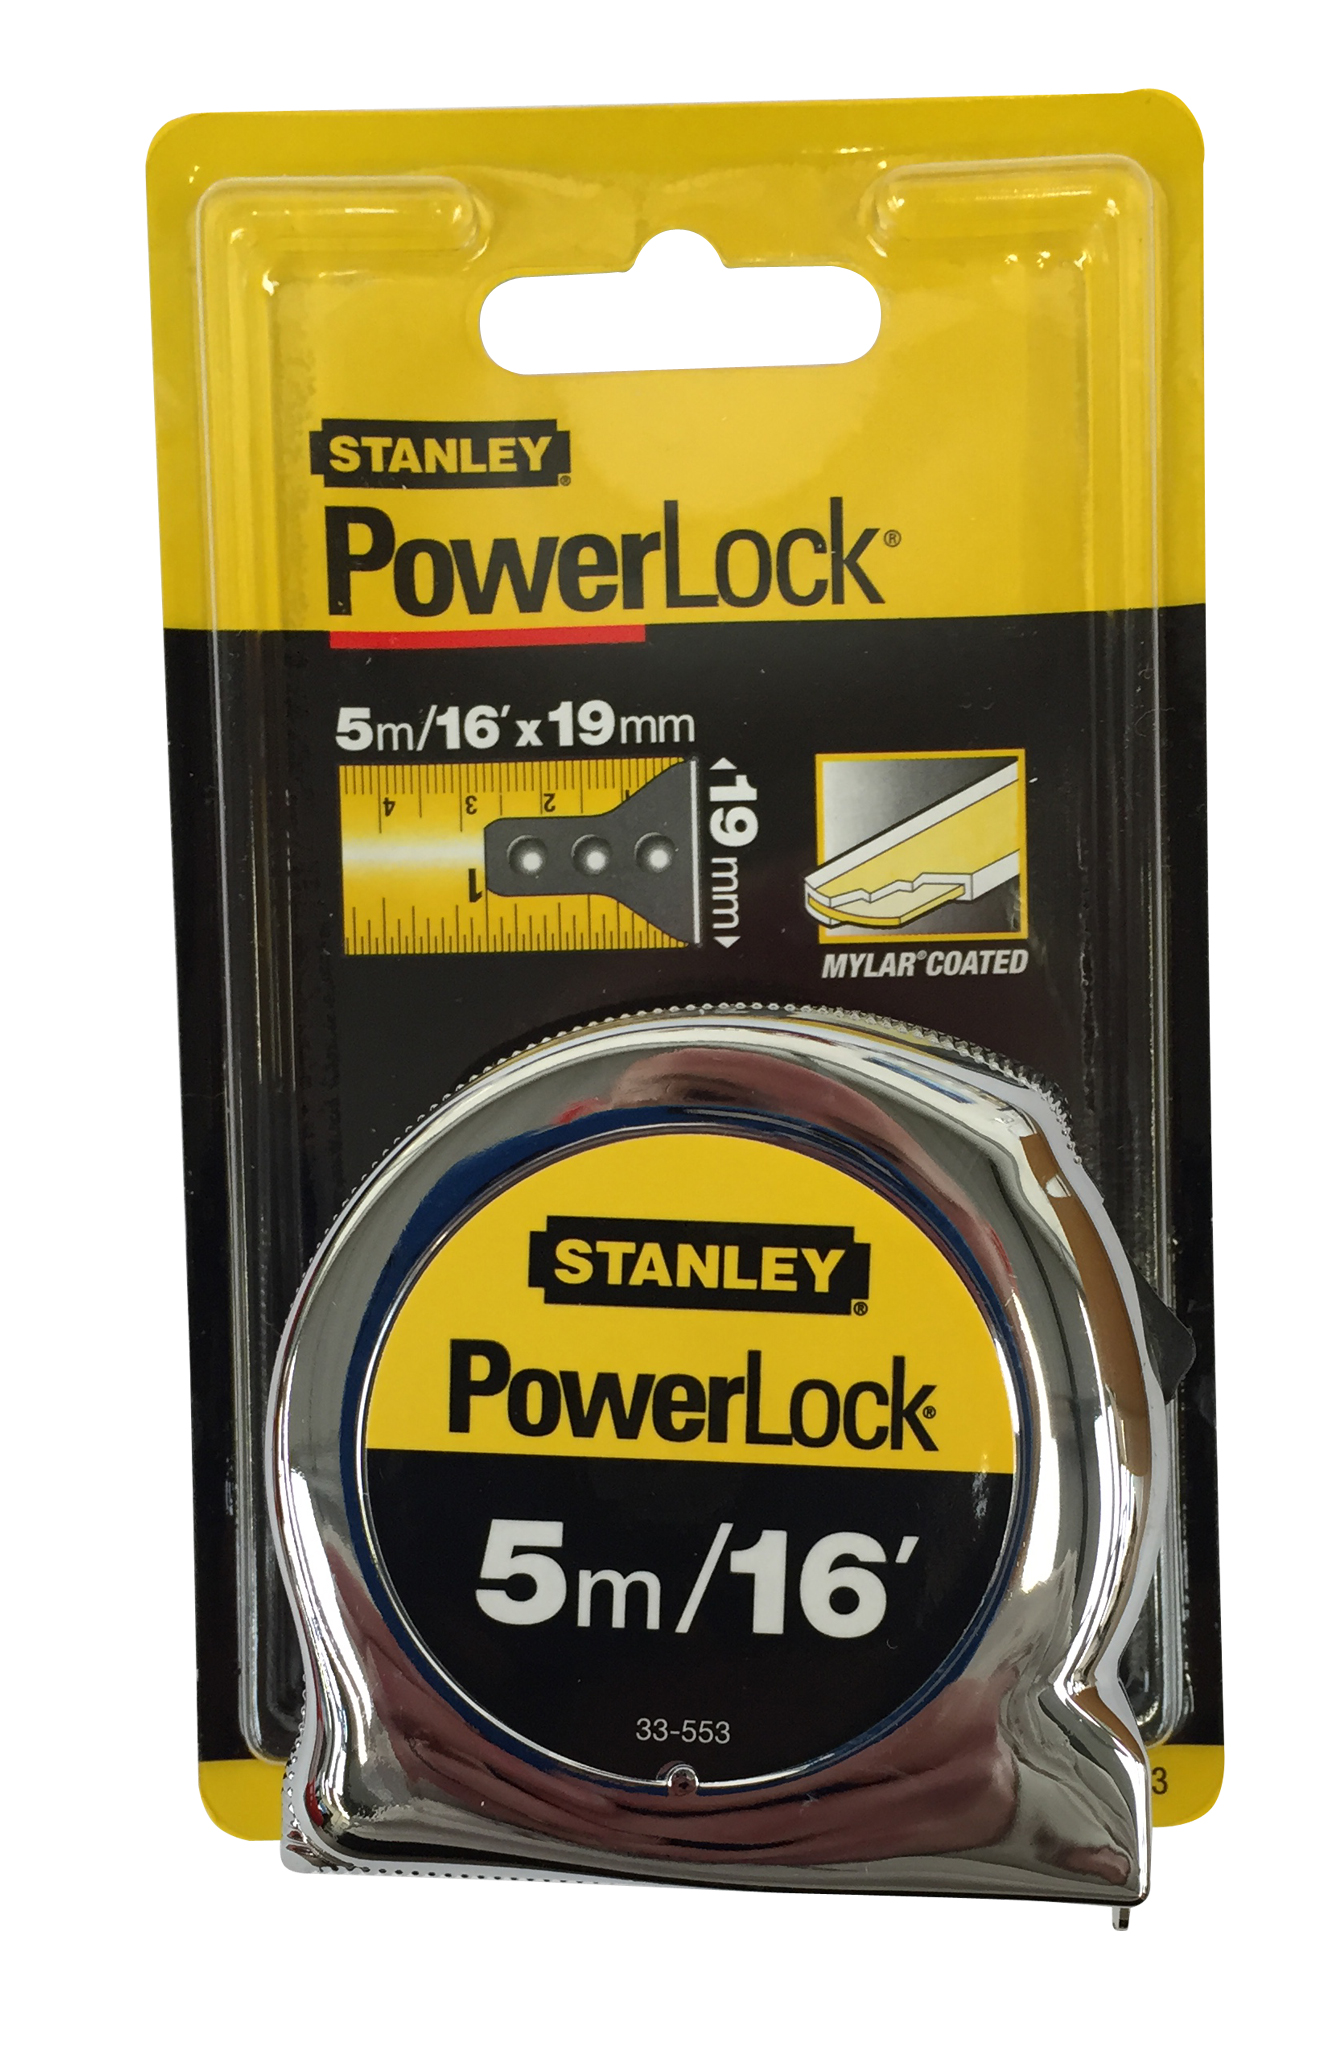 Stanley 5m 16ft Powerlock Tape Measure Classic Original Chrome Micro STA033553 